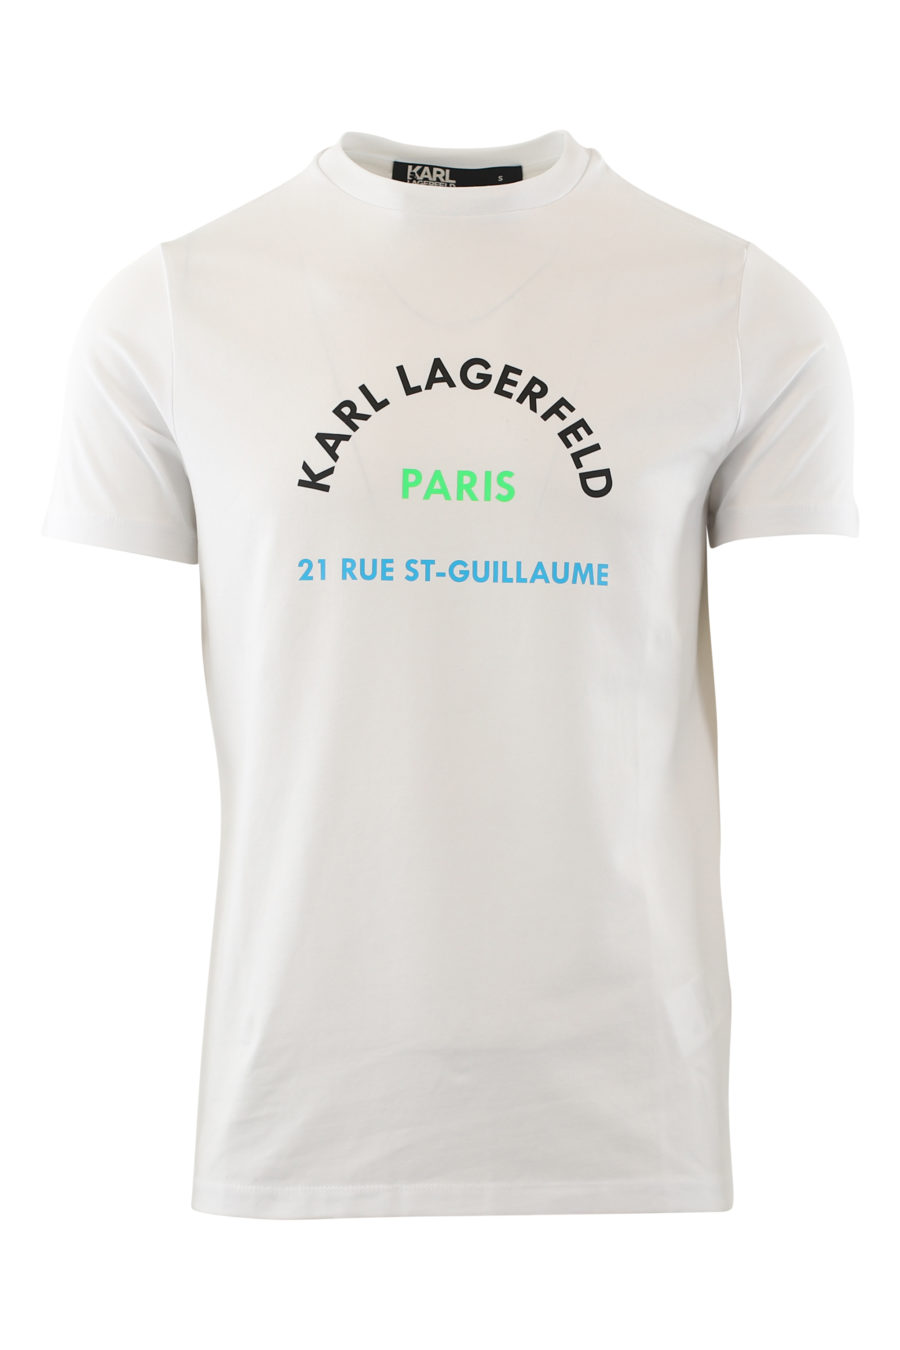 Camiseta blanca con logo "rue st-guillaume" multicolor - IMG 6519